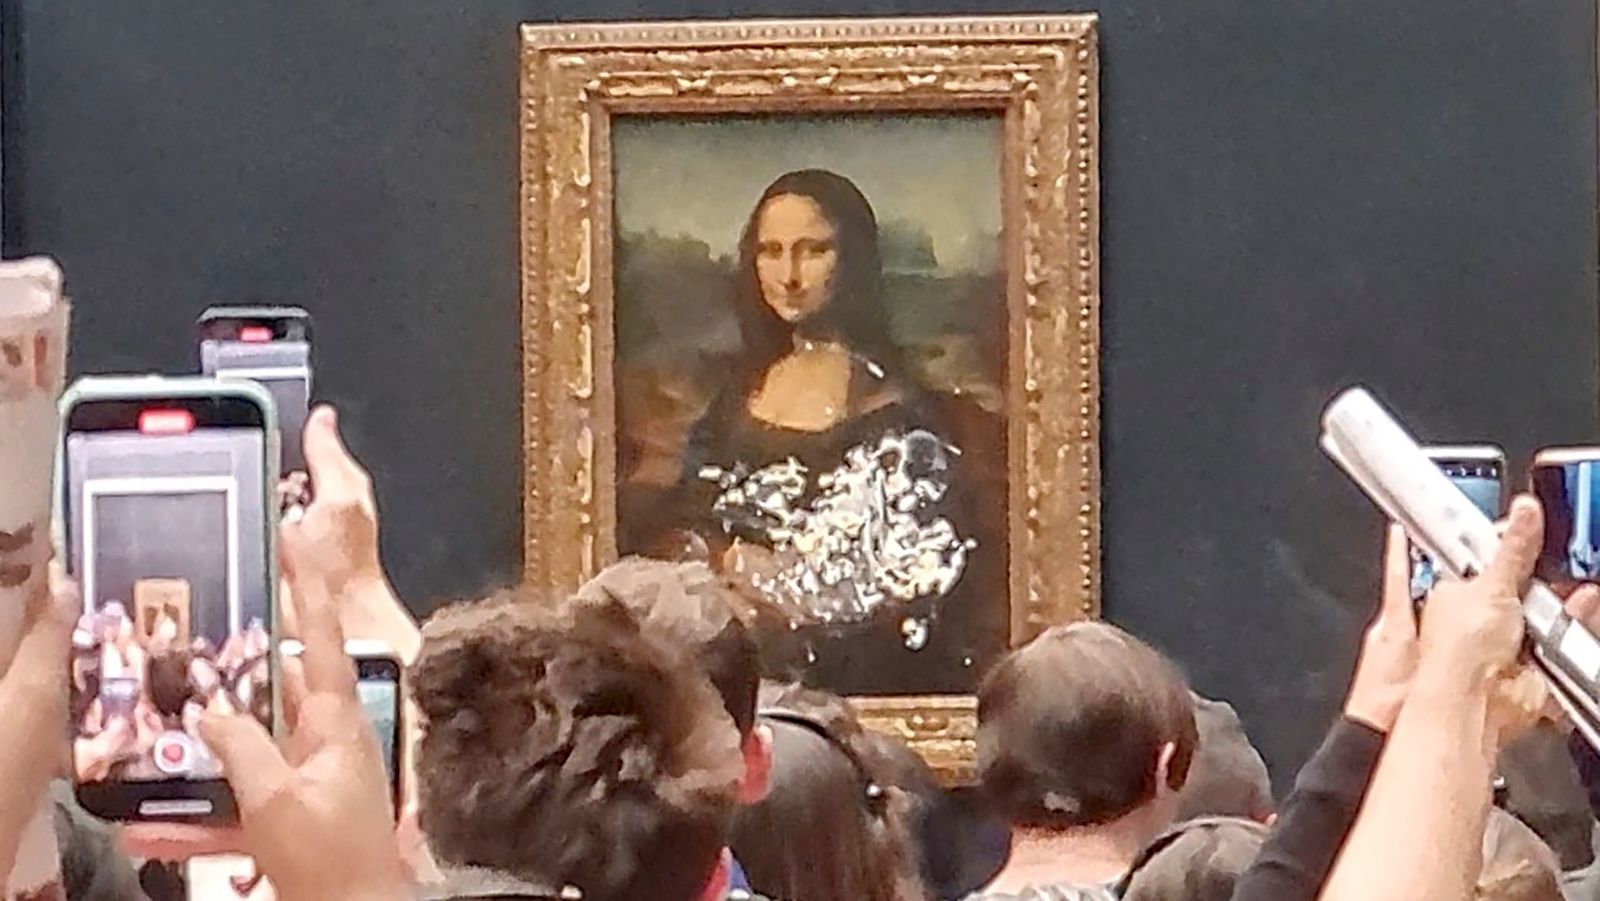 Creating the Mona Lisa out of Monalisa potatoes